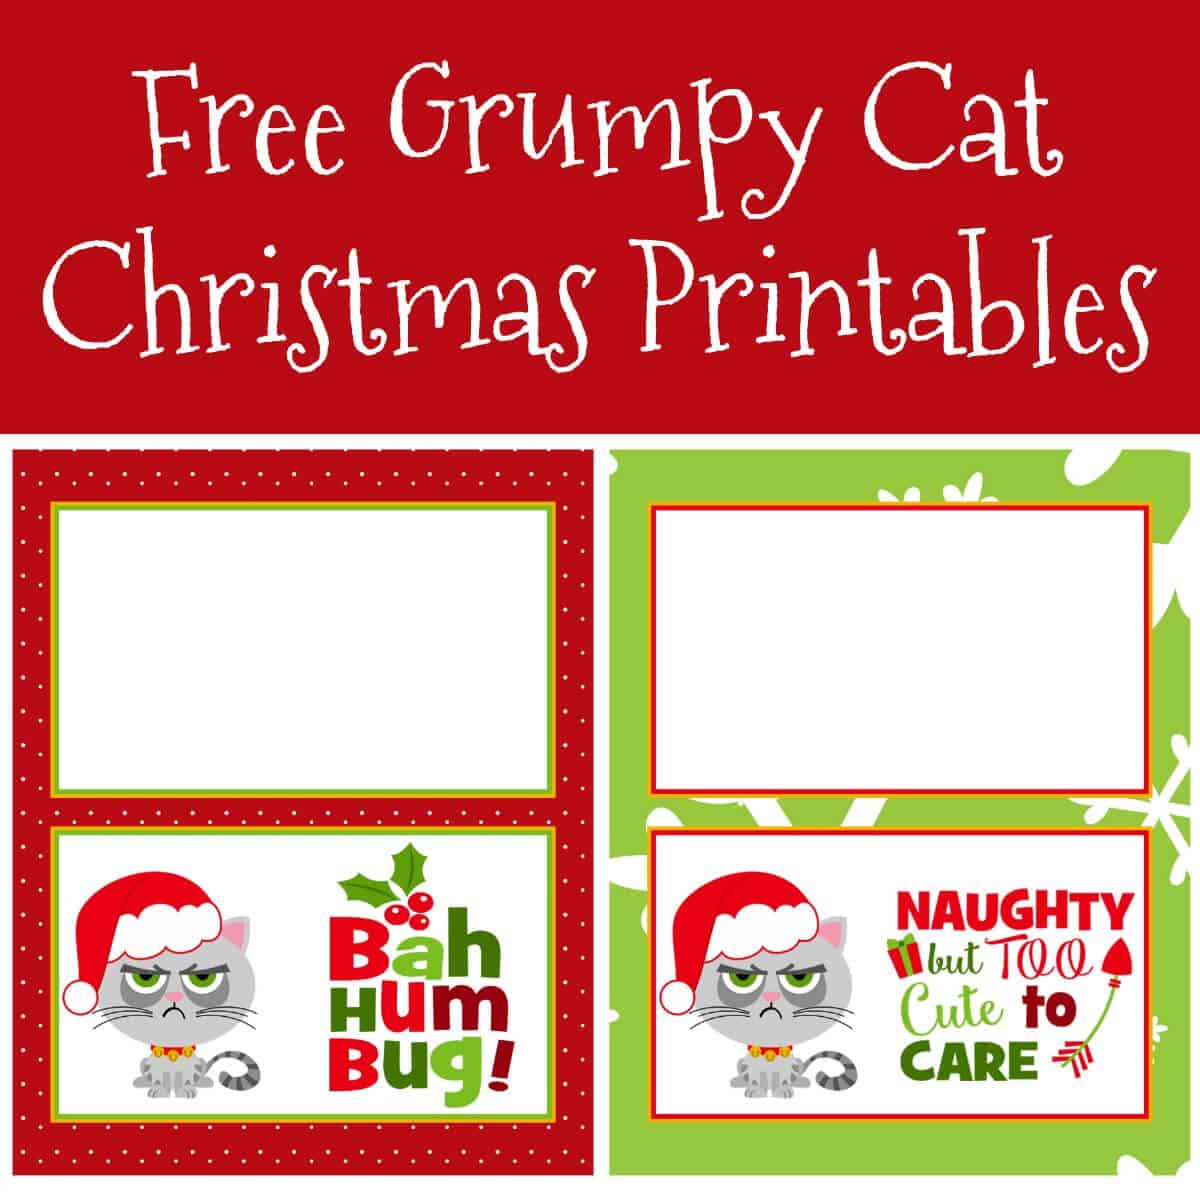 Free Grumpy Cat Christmas Printables